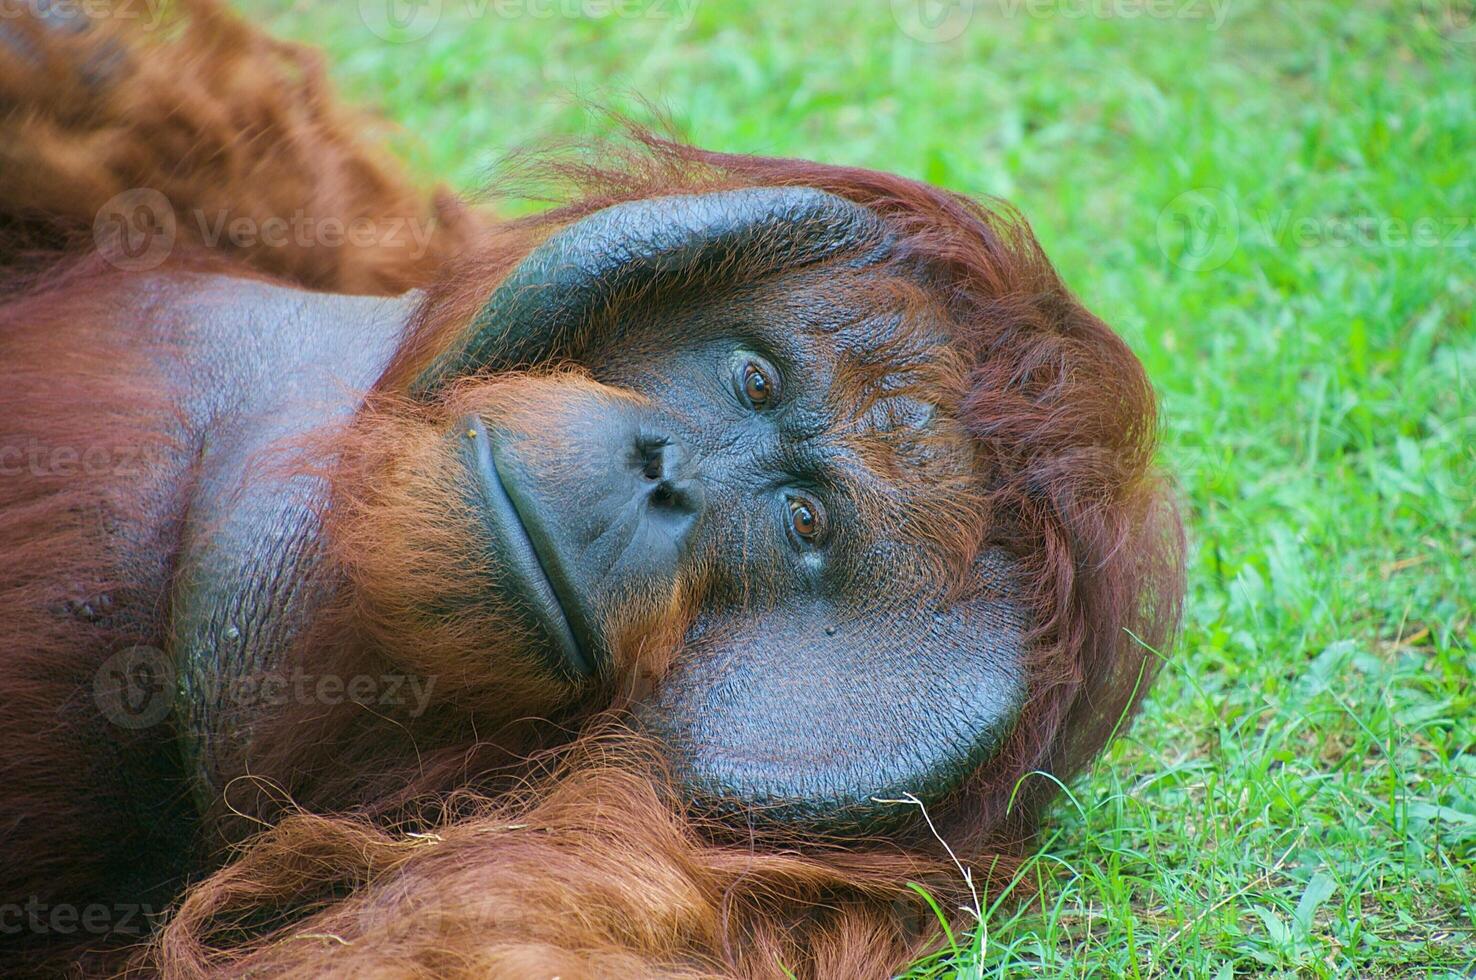 Orangutan lying on grass photo